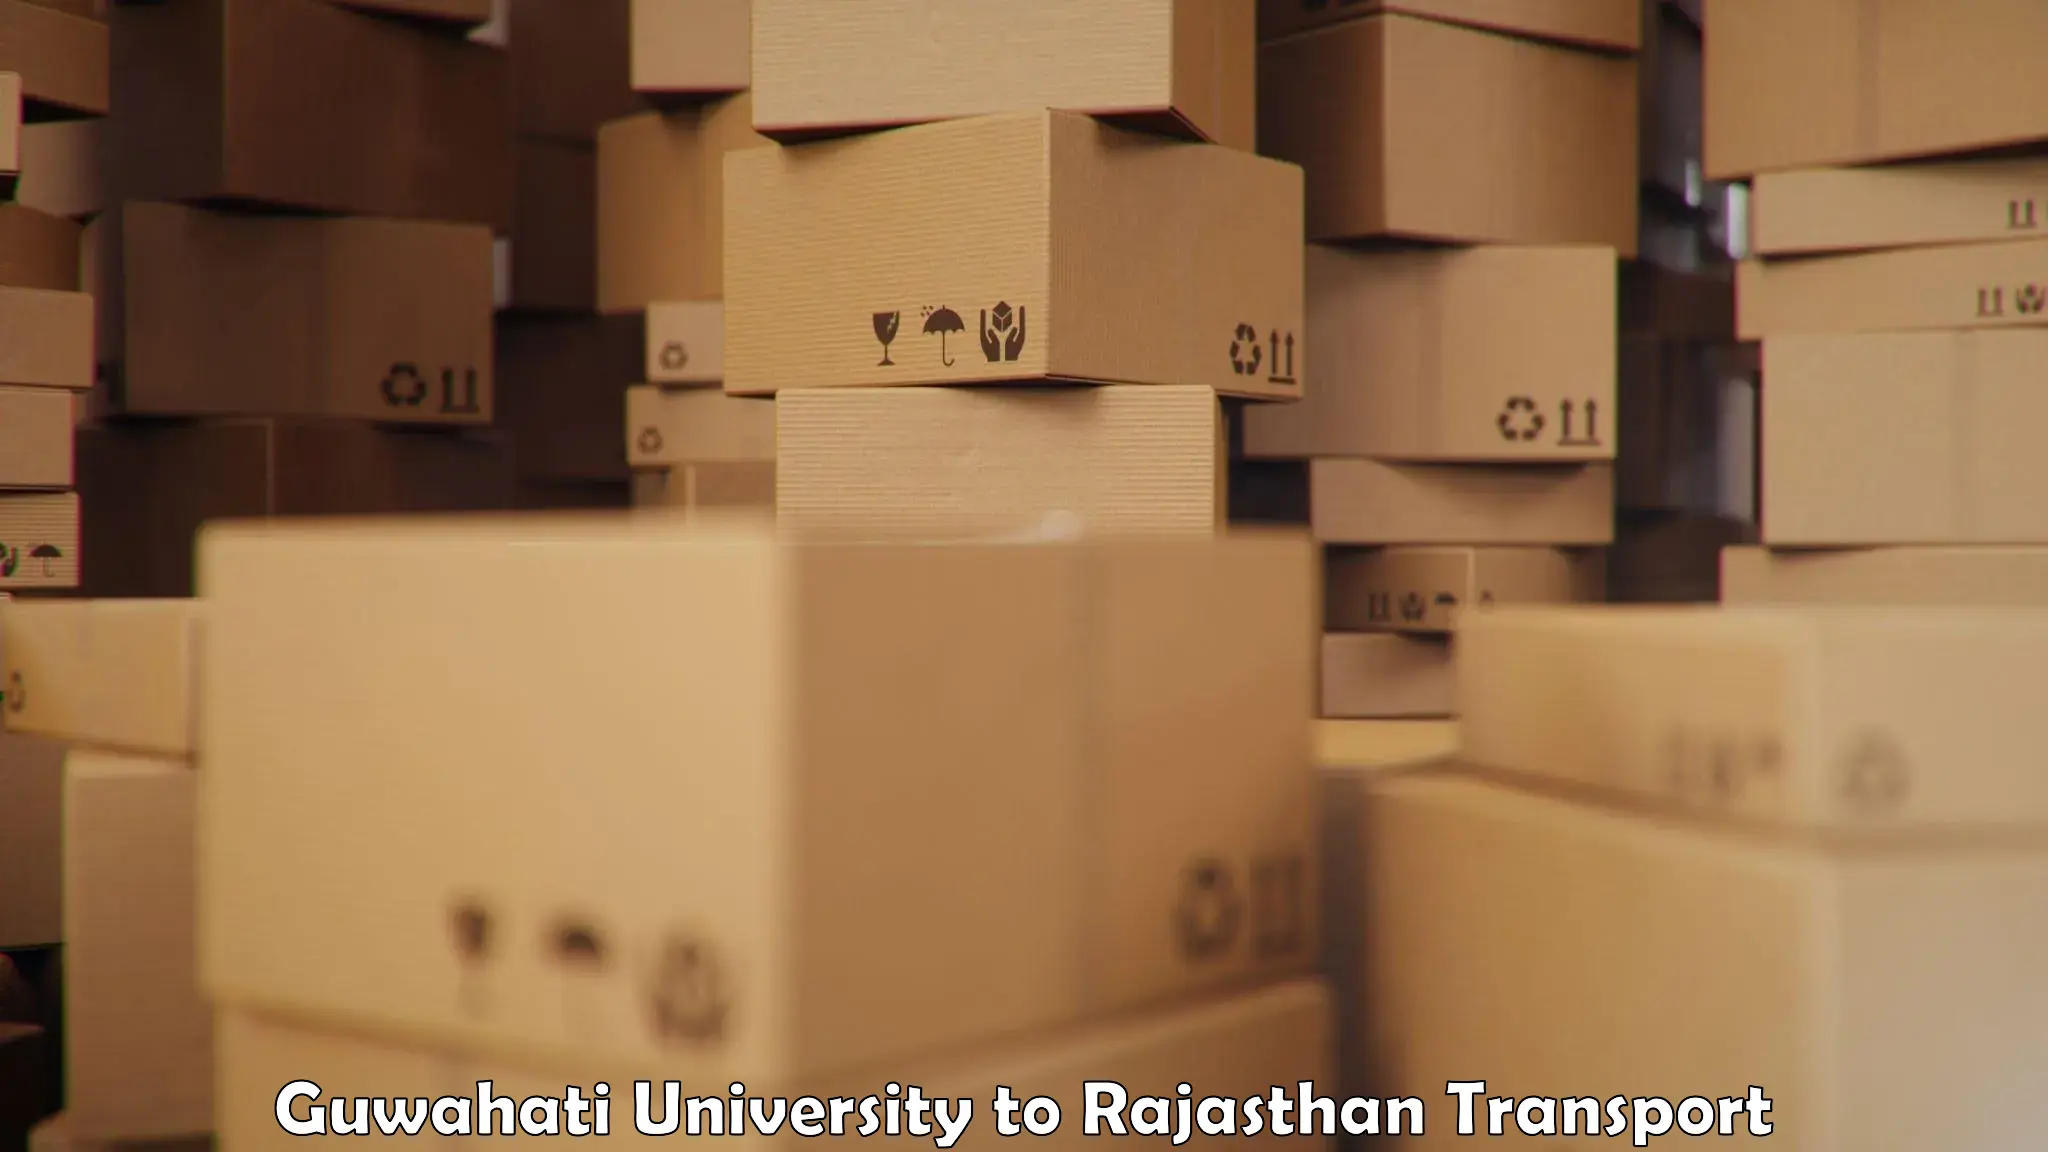 Pick up transport service Guwahati University to Nagaur